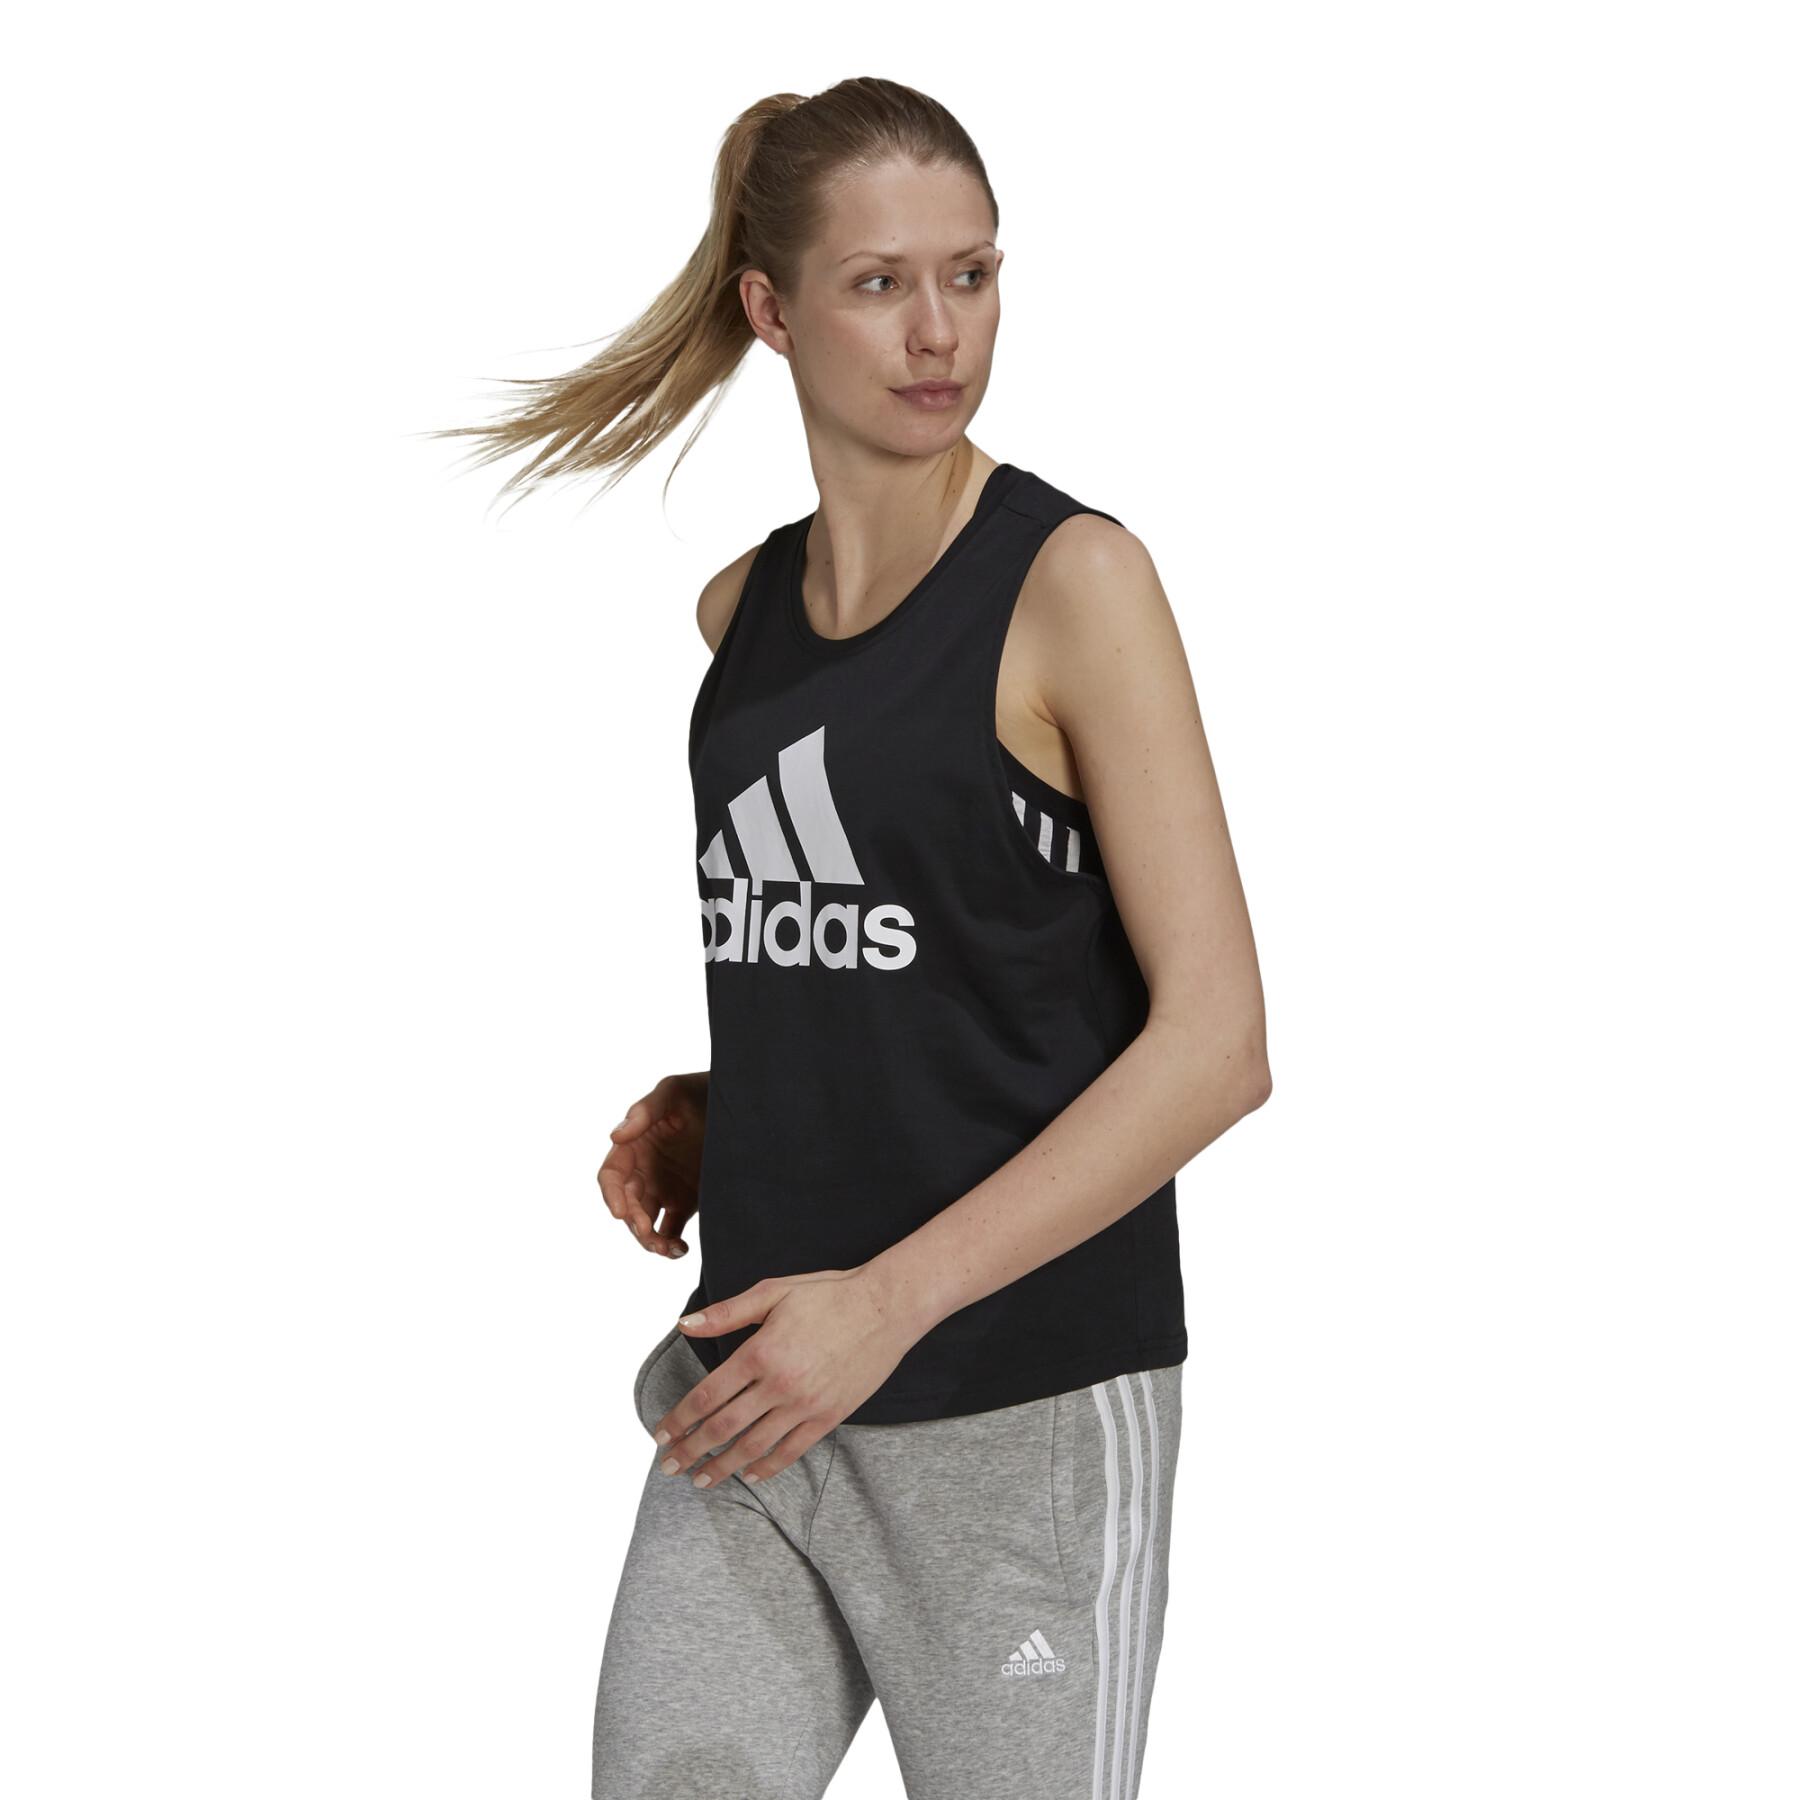 Women's tank top adidas Essentials Big Logo - adidas - Brands - Volleyball  wear